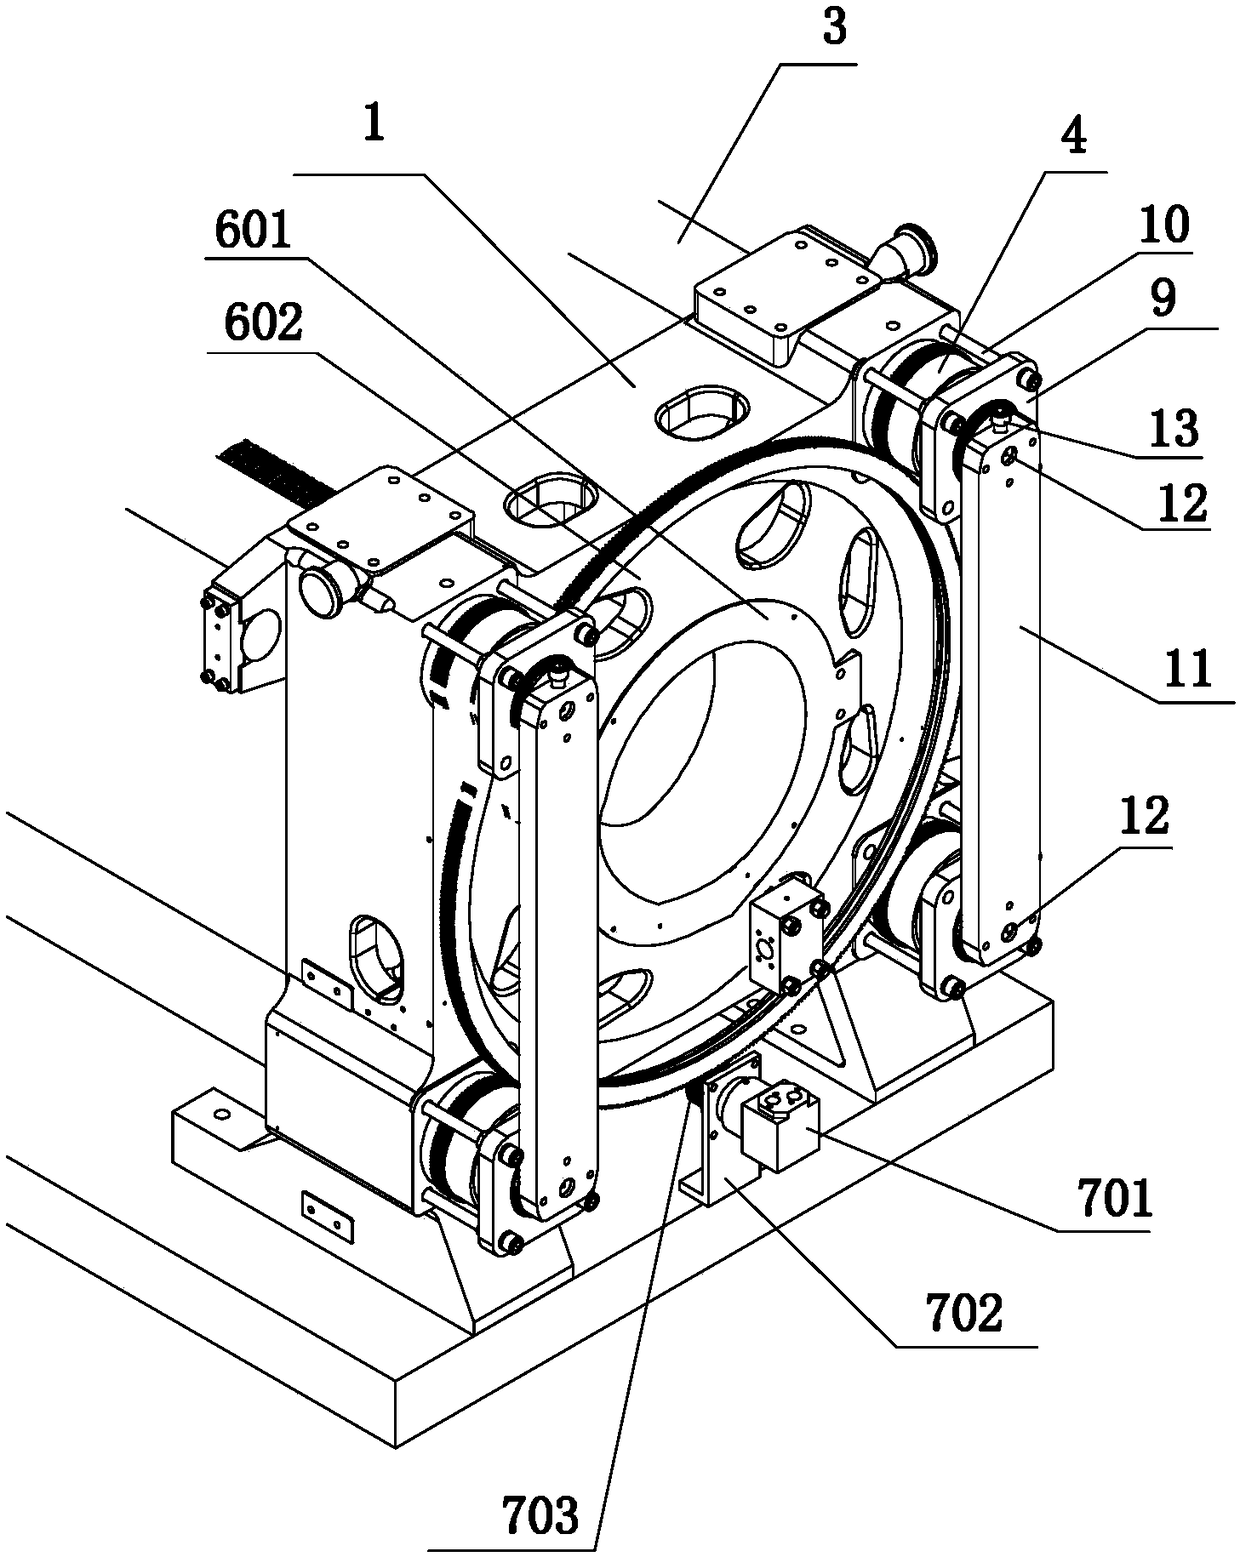 High-rigidity two-plate die locking mechanism